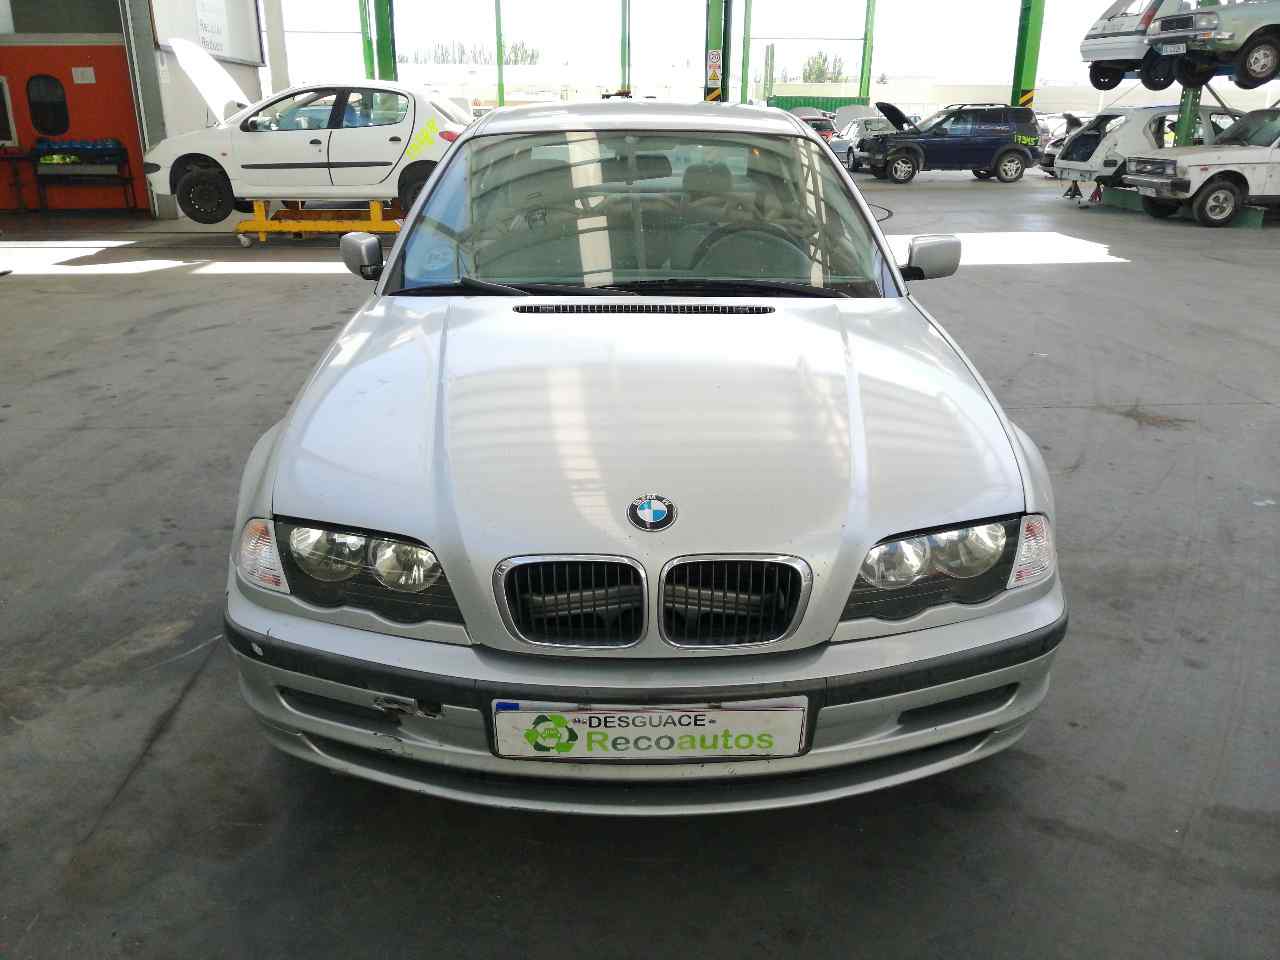 BMW 3 Series E46 (1997-2006) Indicator Wiper Stalk Switch 6131837644491, 01404014, LUK 19904864